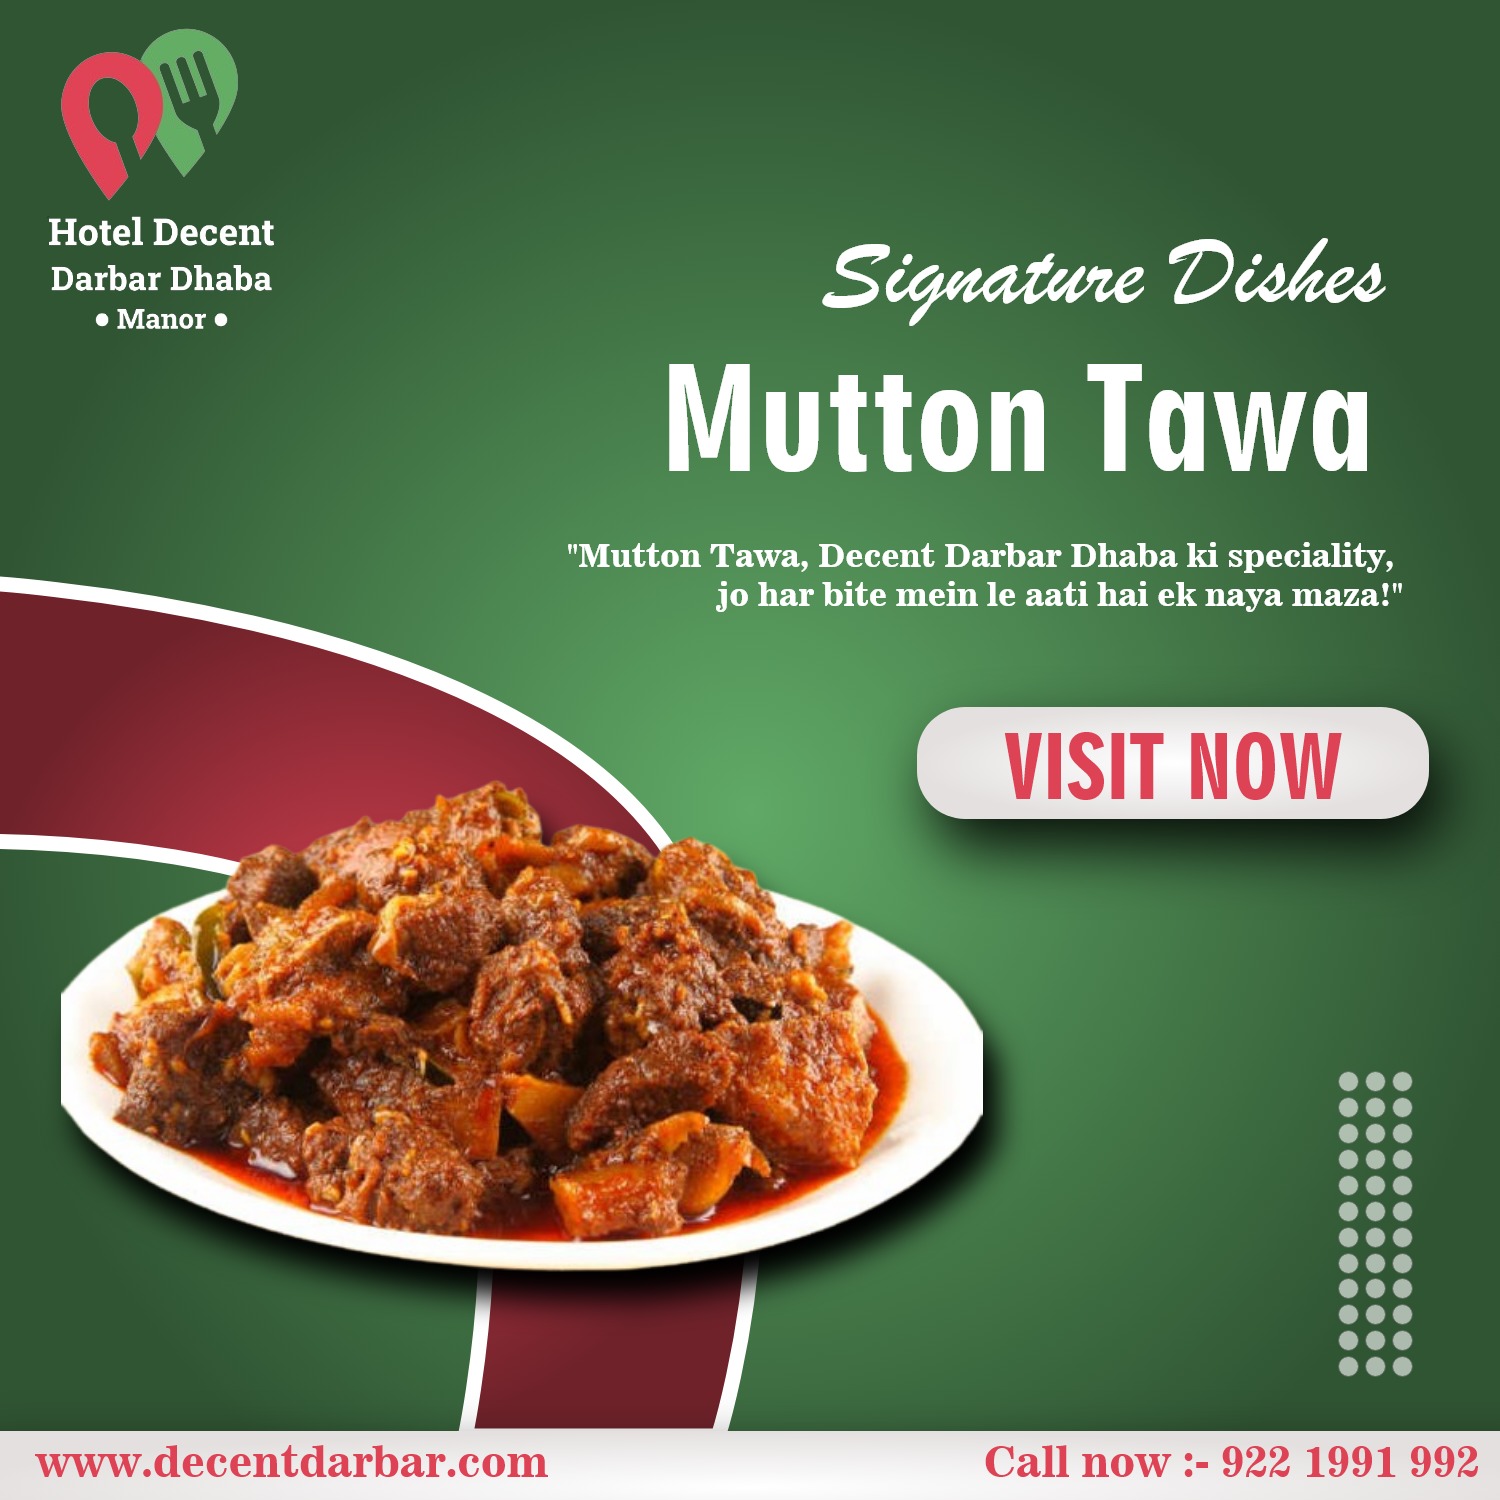 Indulge in Signature Delicacies like Mutton Tawa